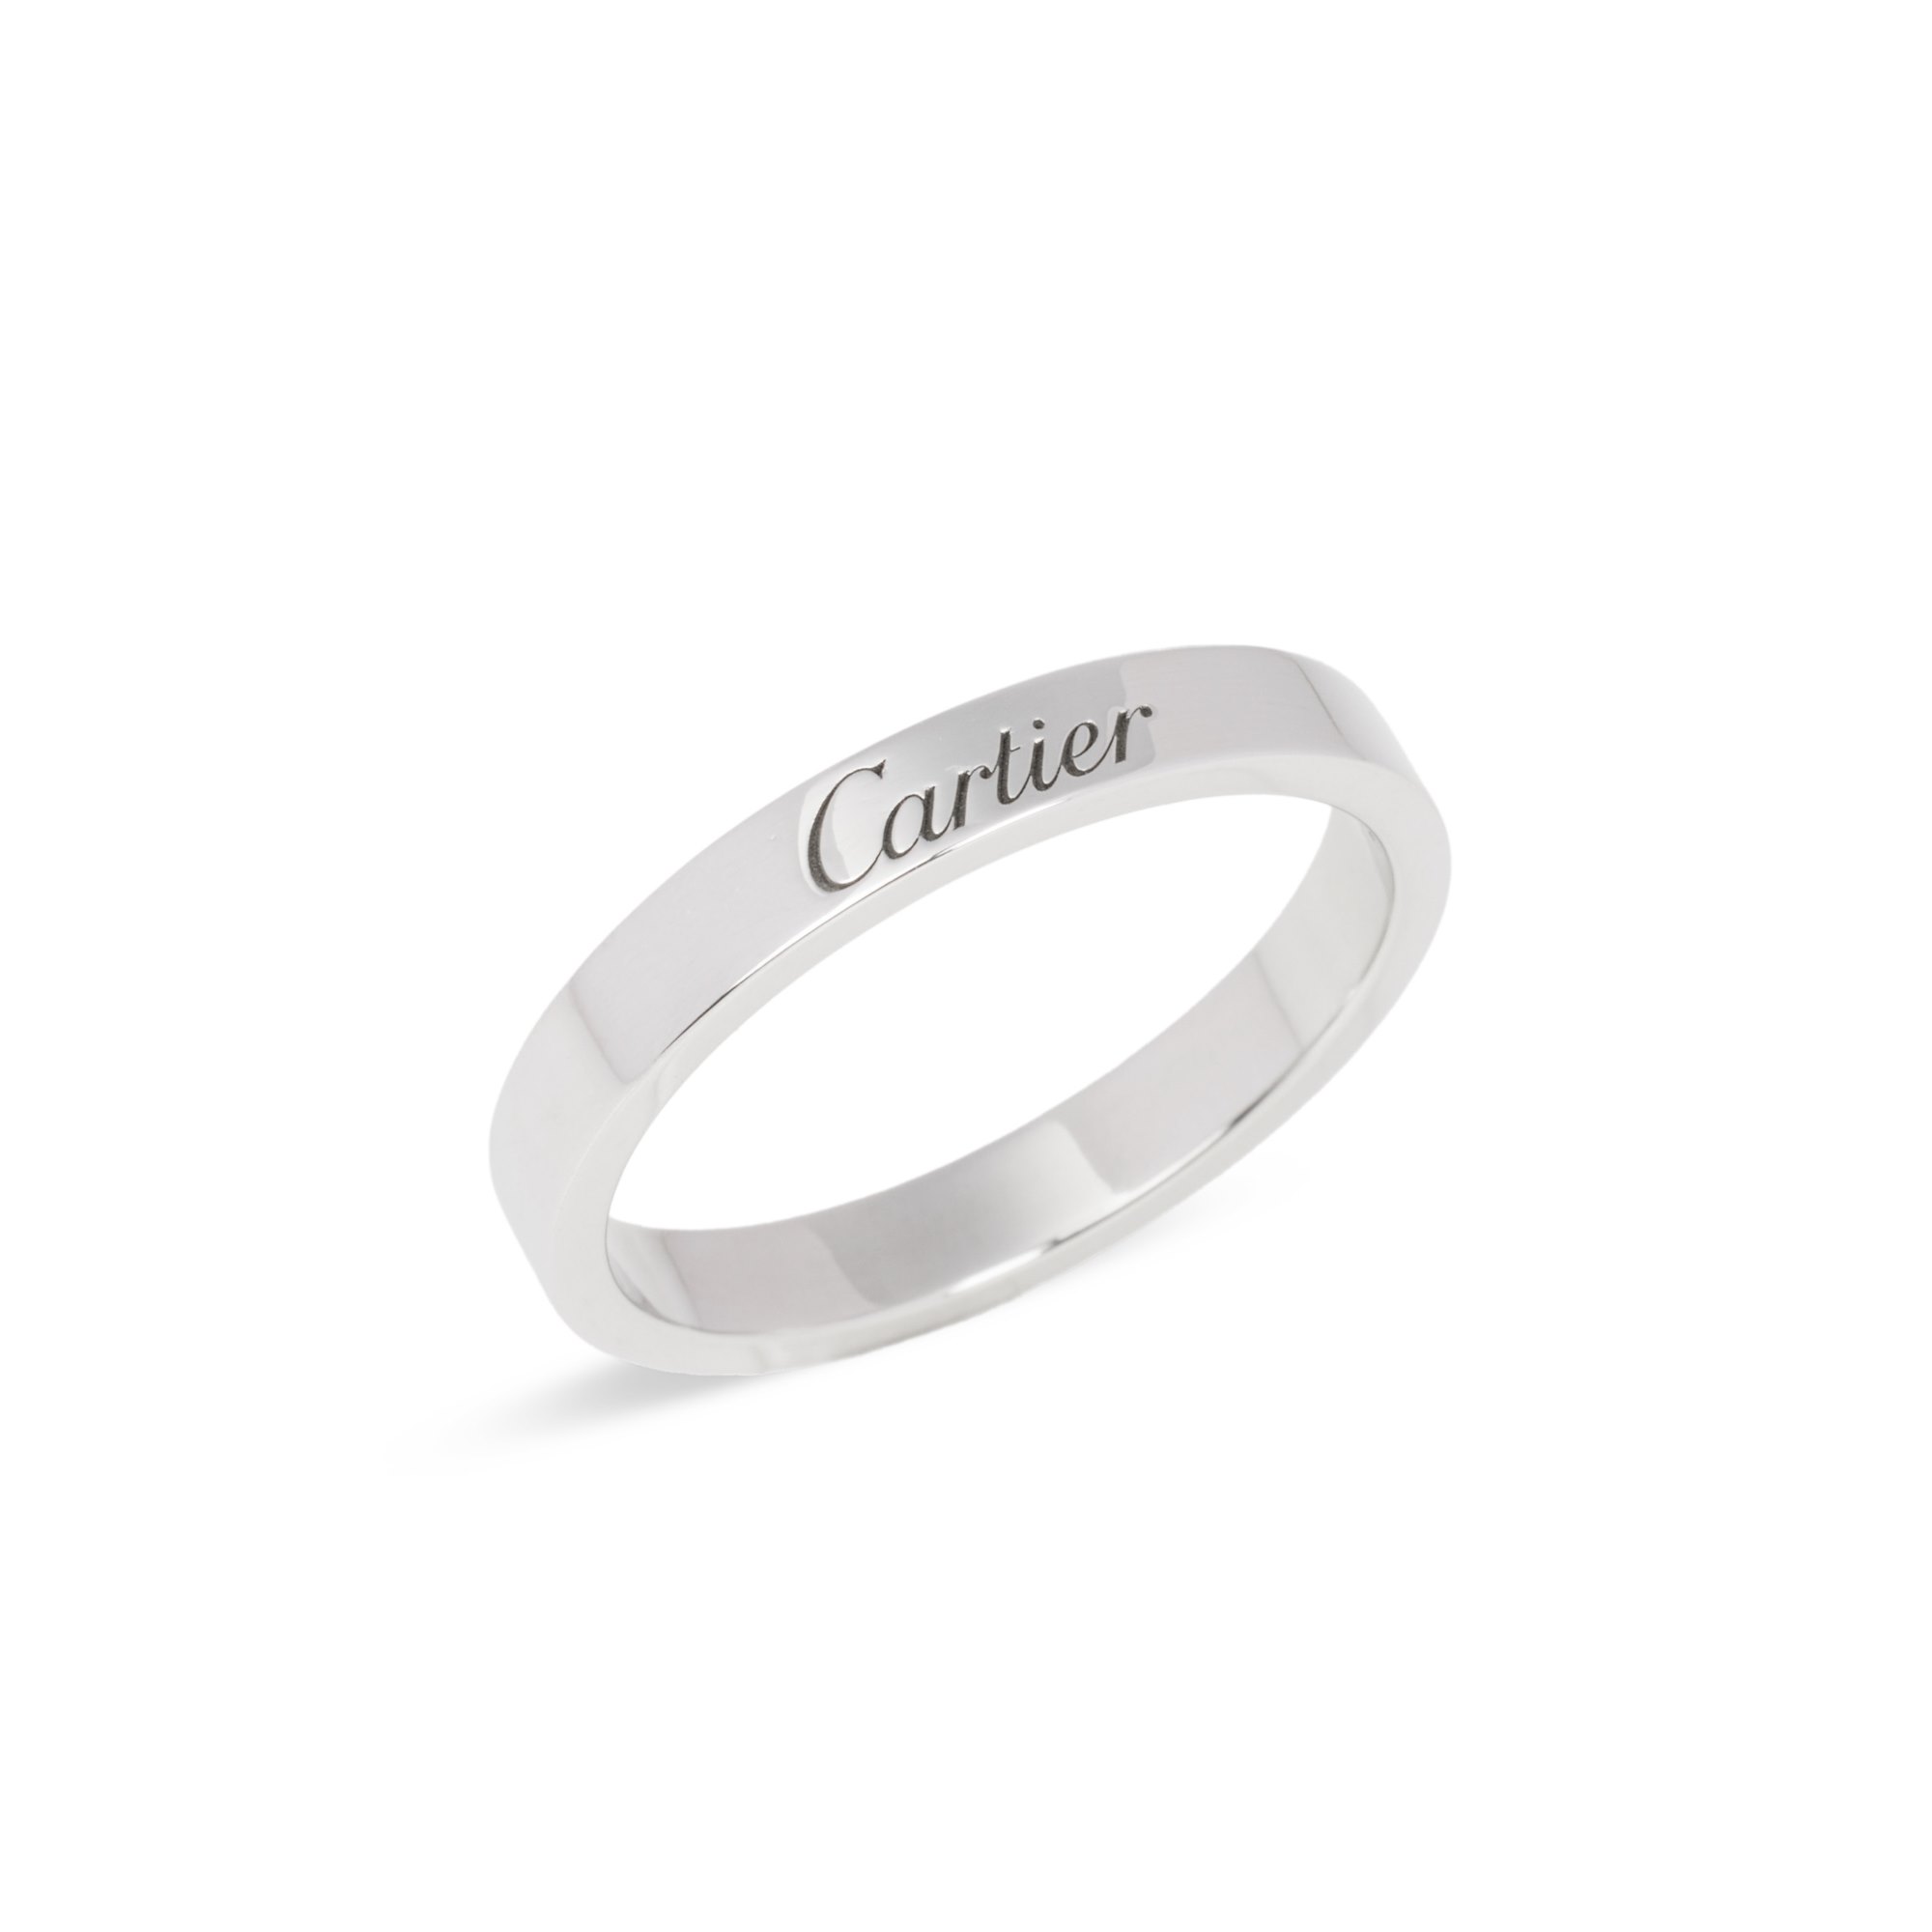 Cartier C de Cartier Ring